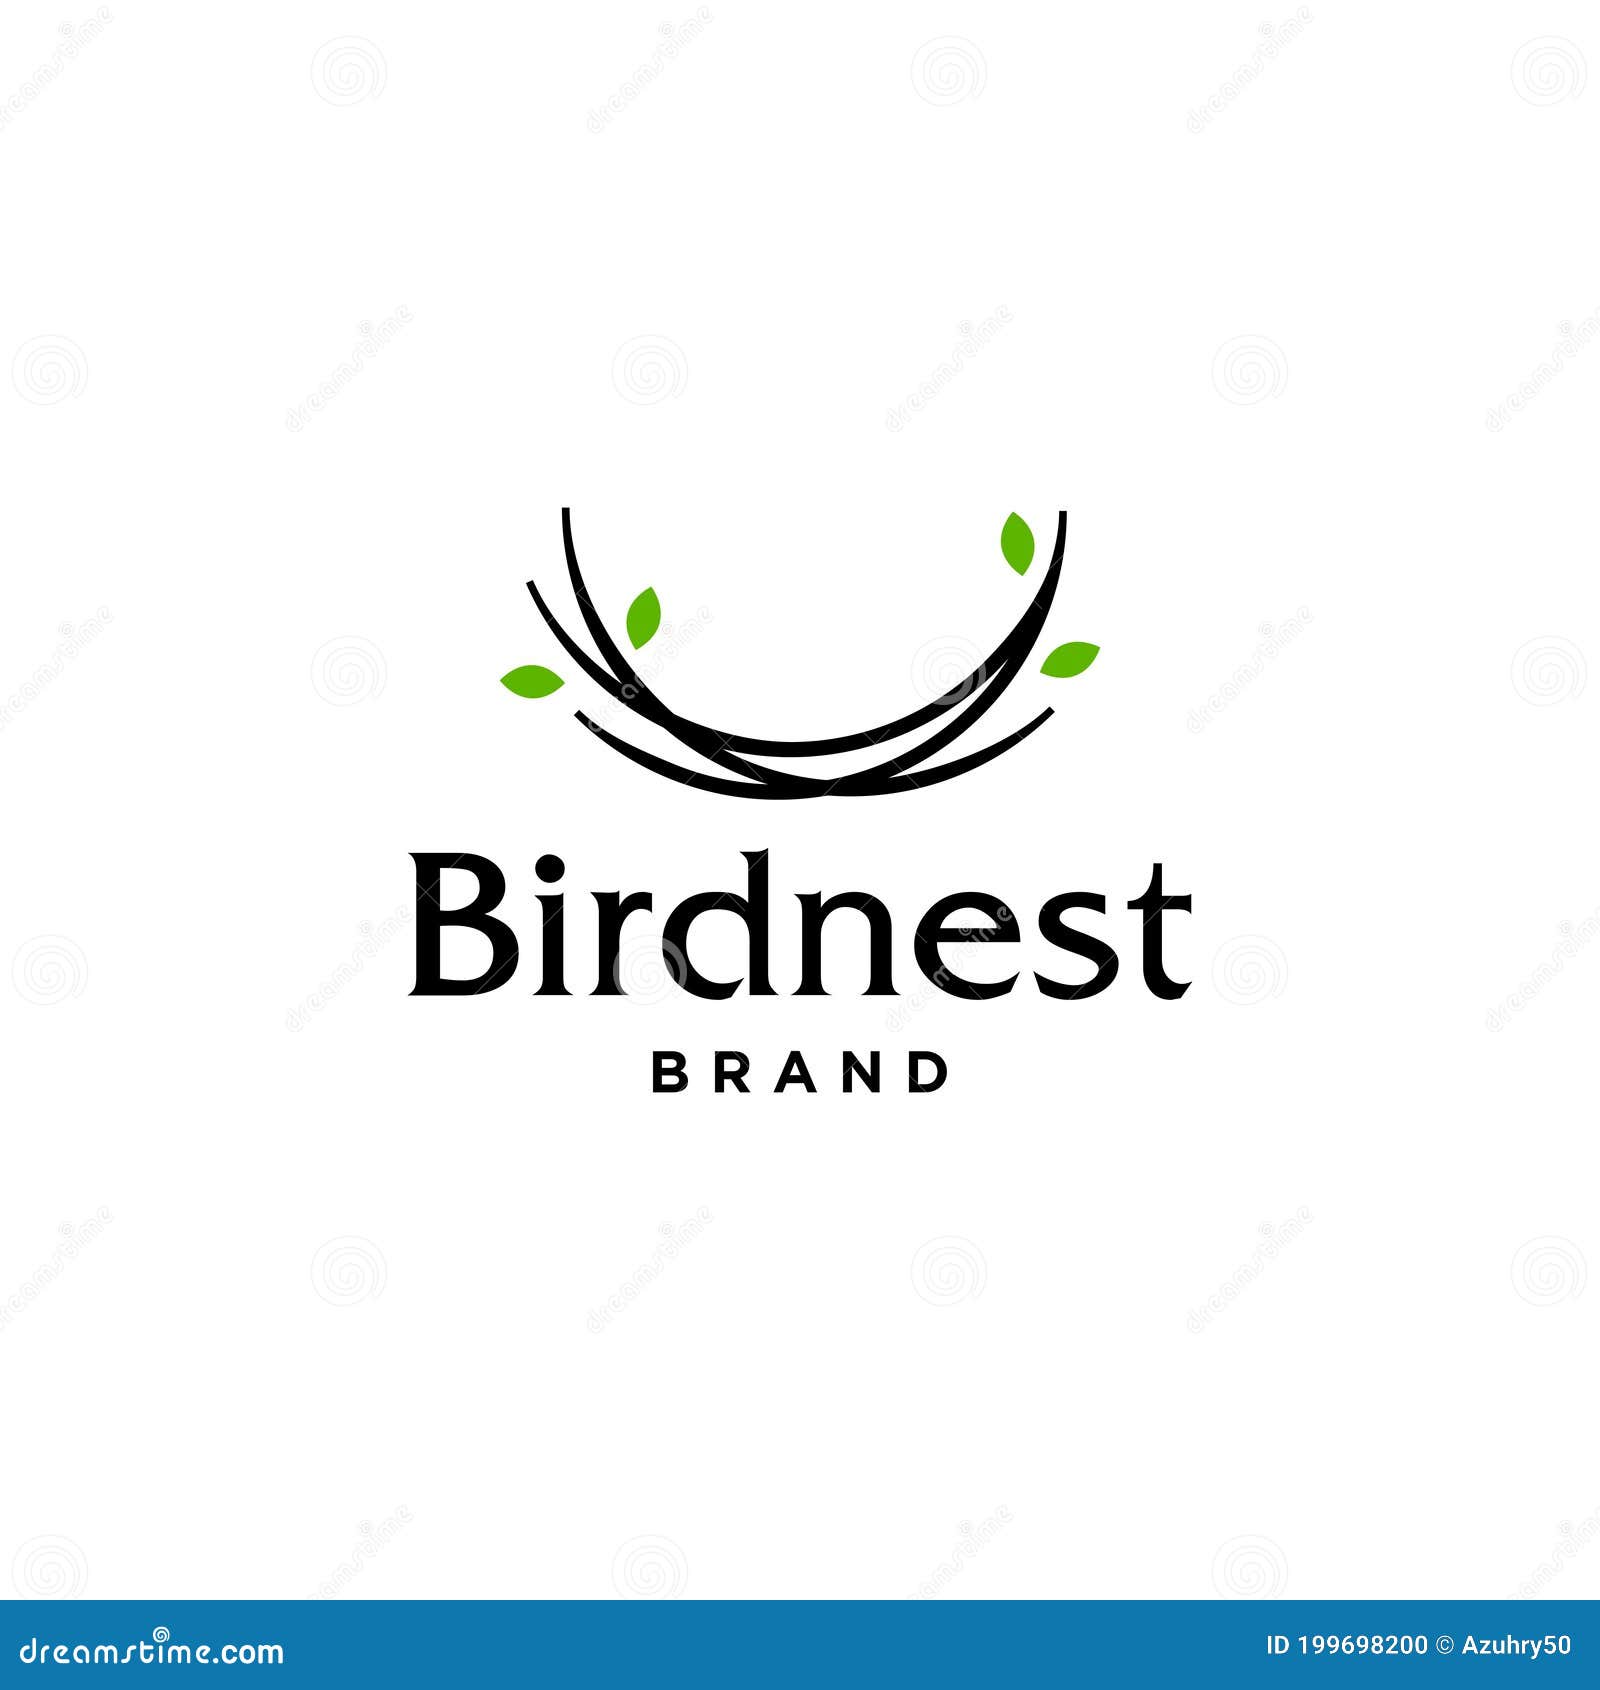 Simple And Minimal Bird Nest Icon Logo Line Illustration With Leaf